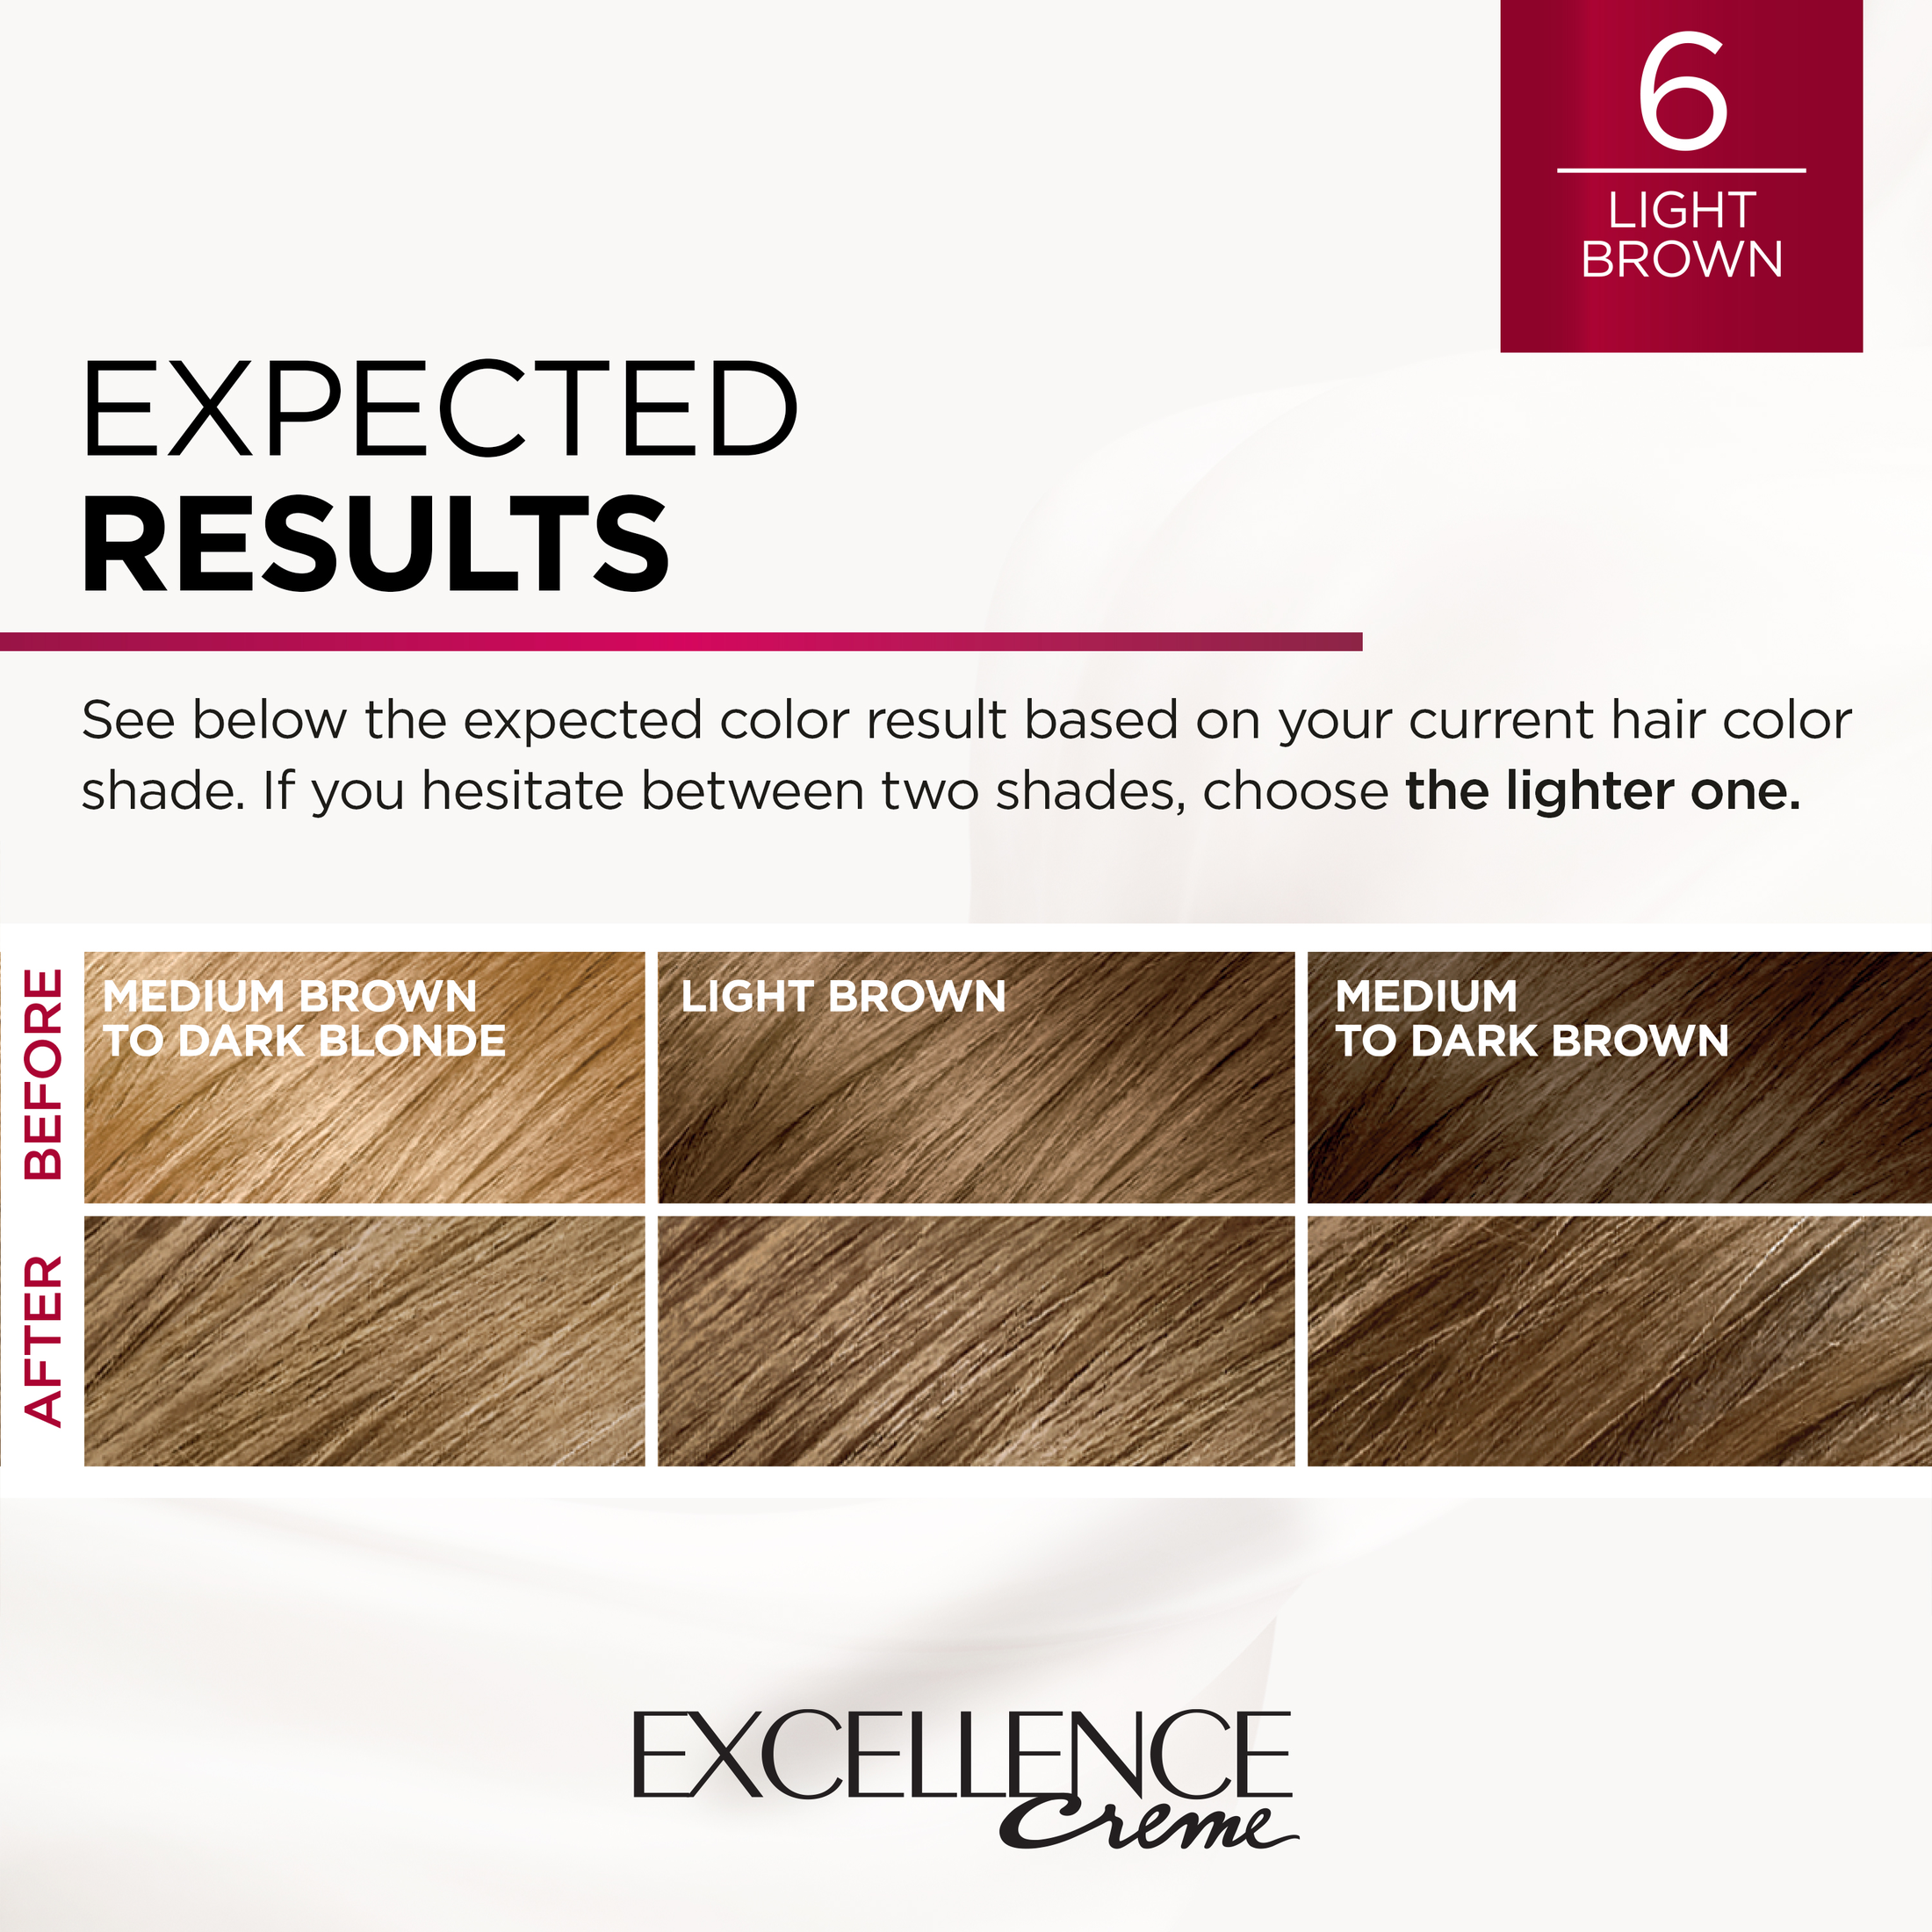 L'Oreal Paris Excellence Creme Permanent Hair Color, 6 Light Brown - image 5 of 8